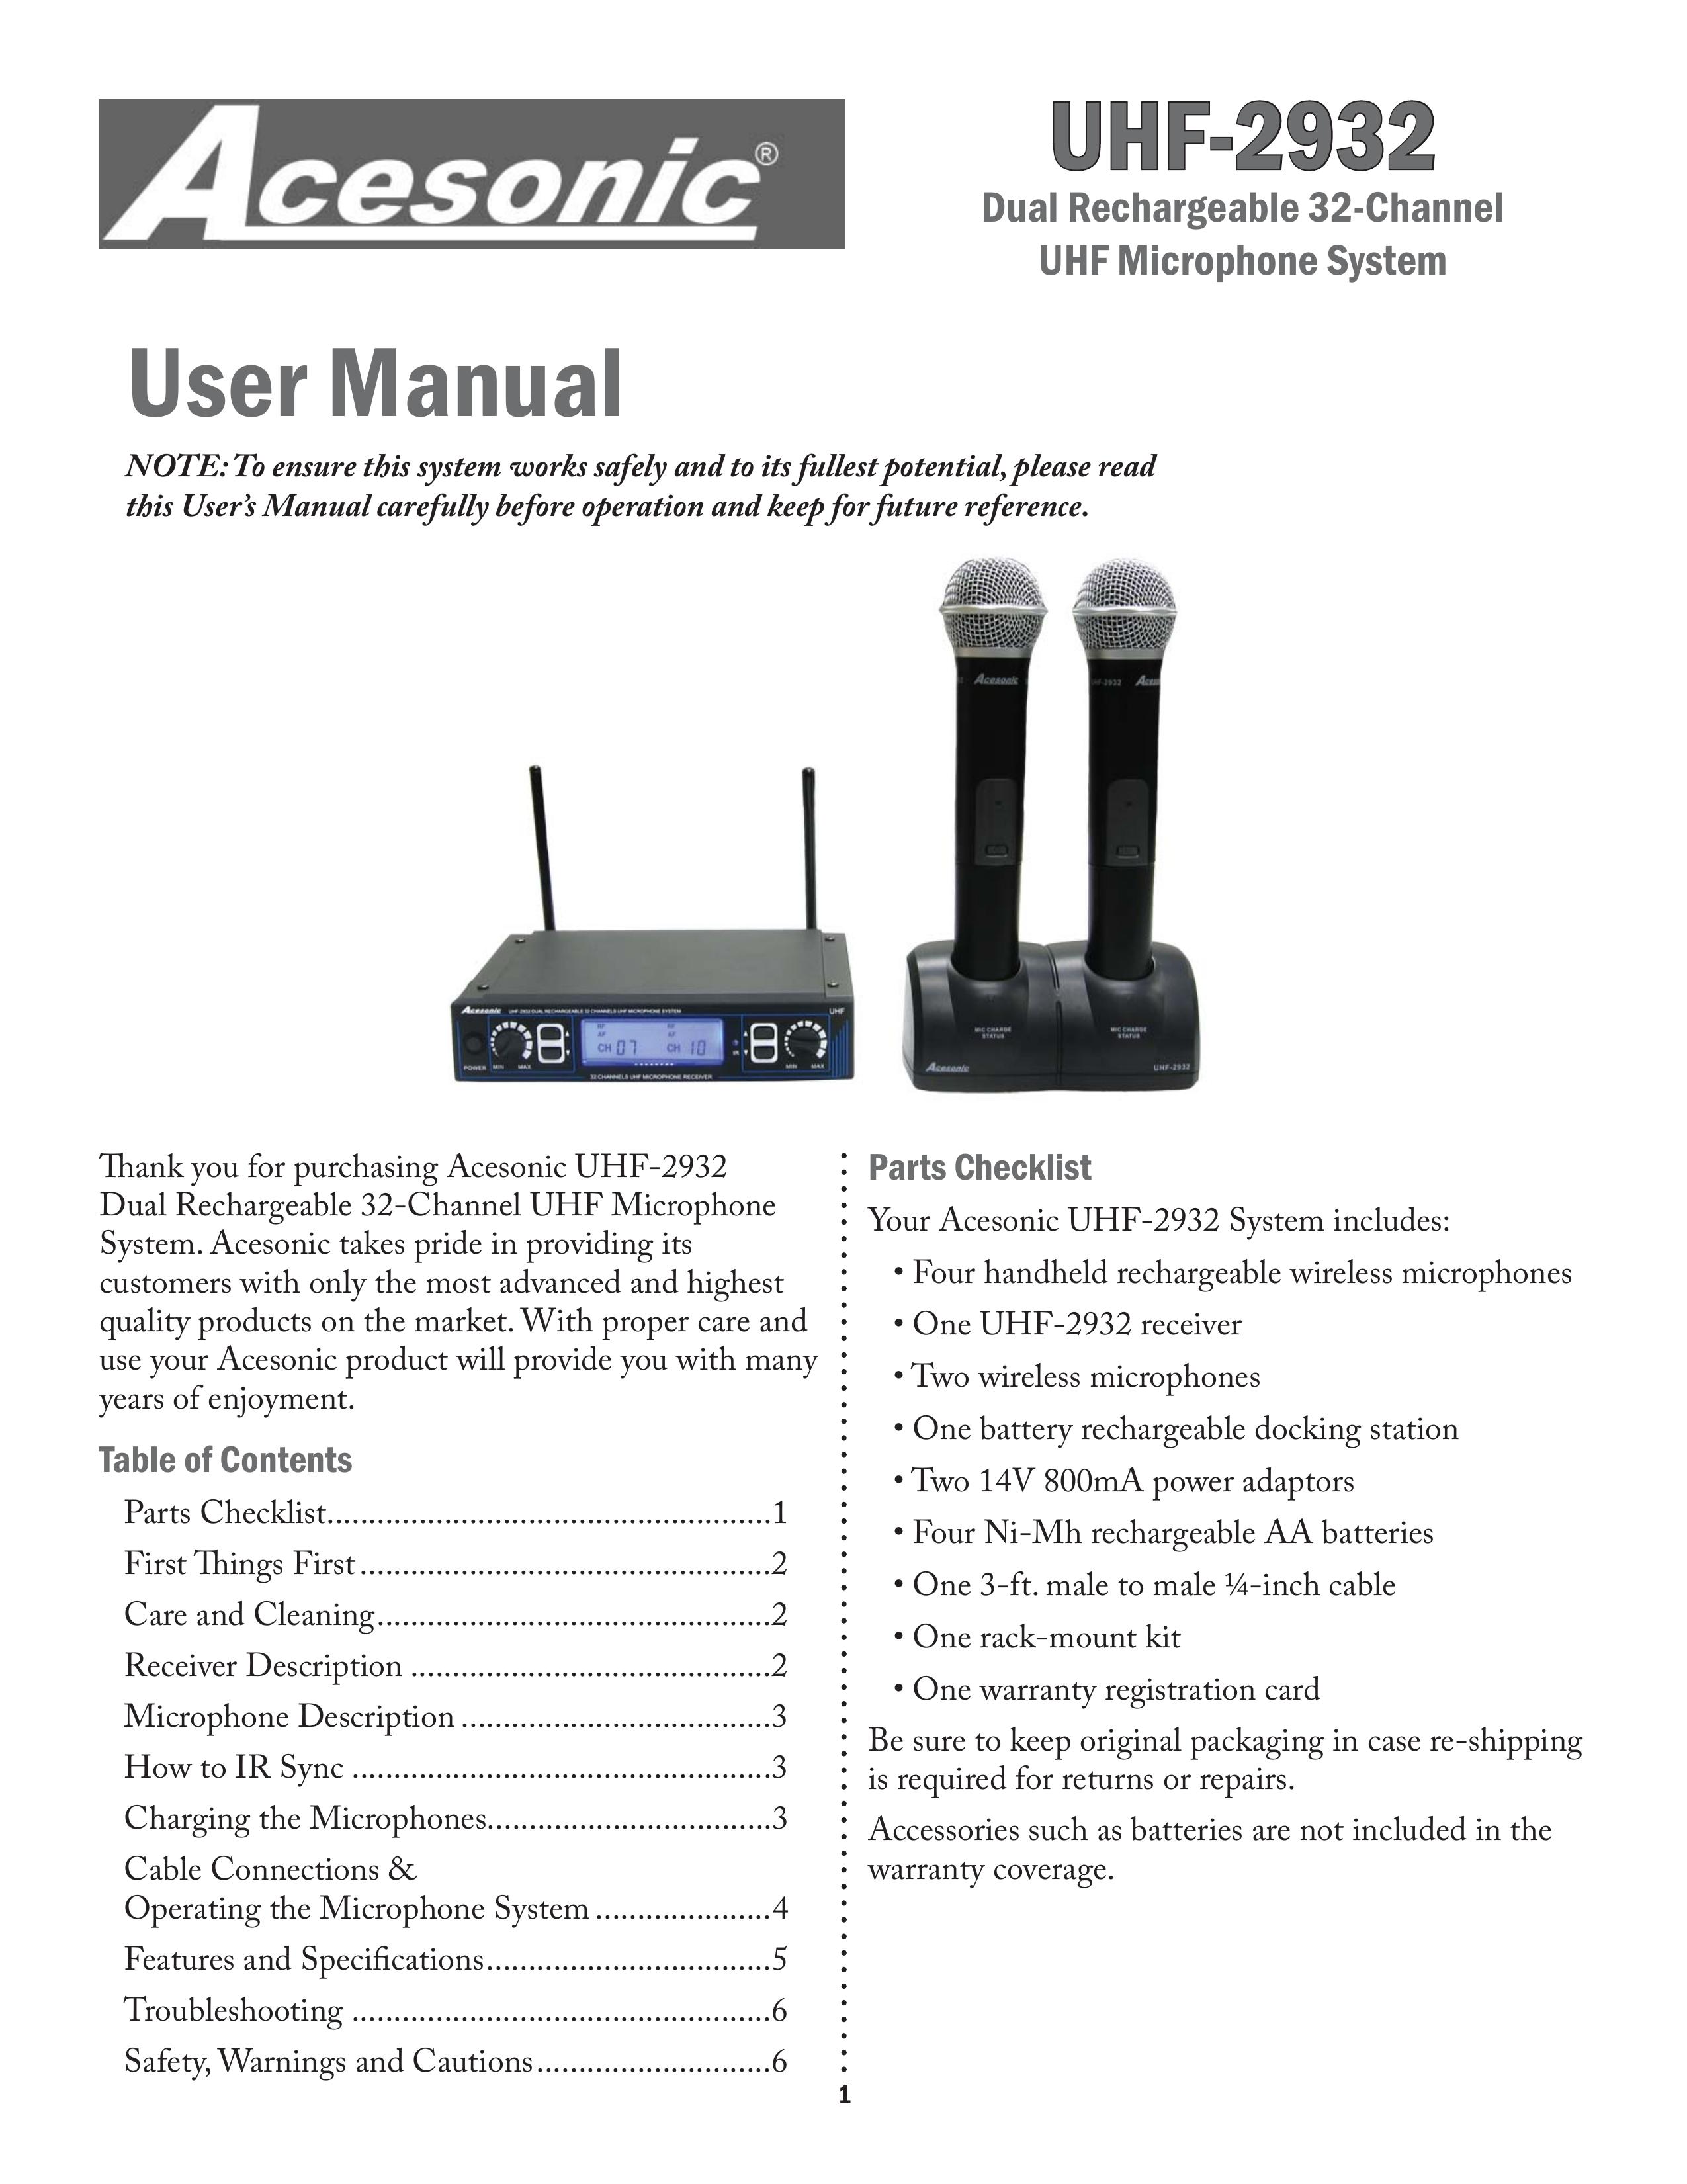 Acesonic UHF-2932 Microphone User Manual